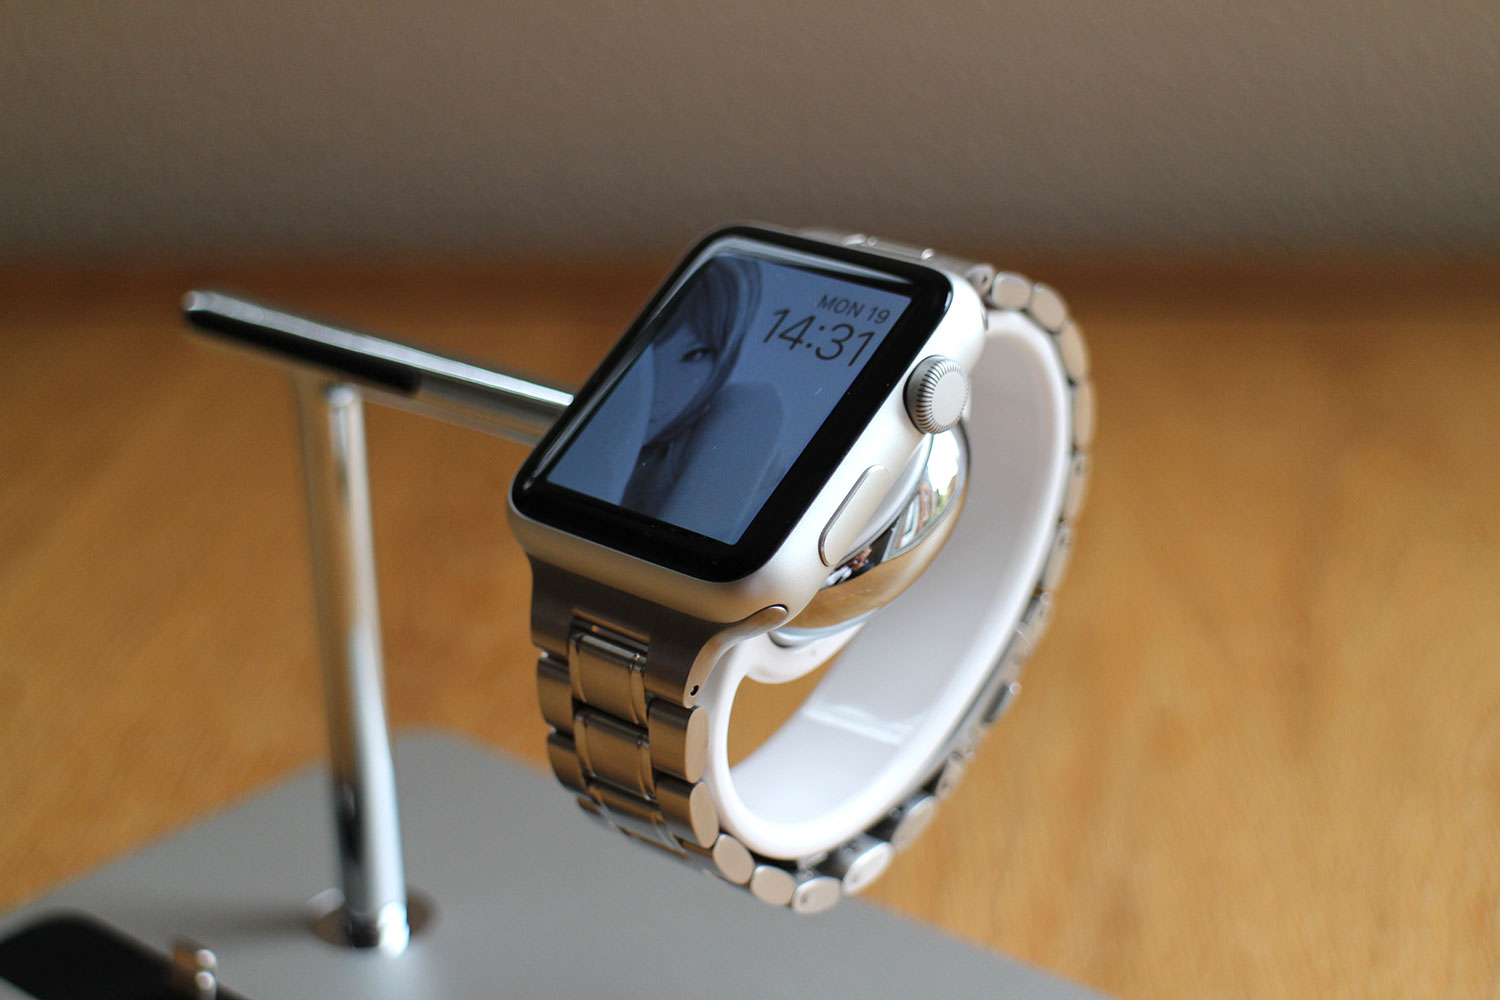 Belkin Apple Watch iPhone Charger